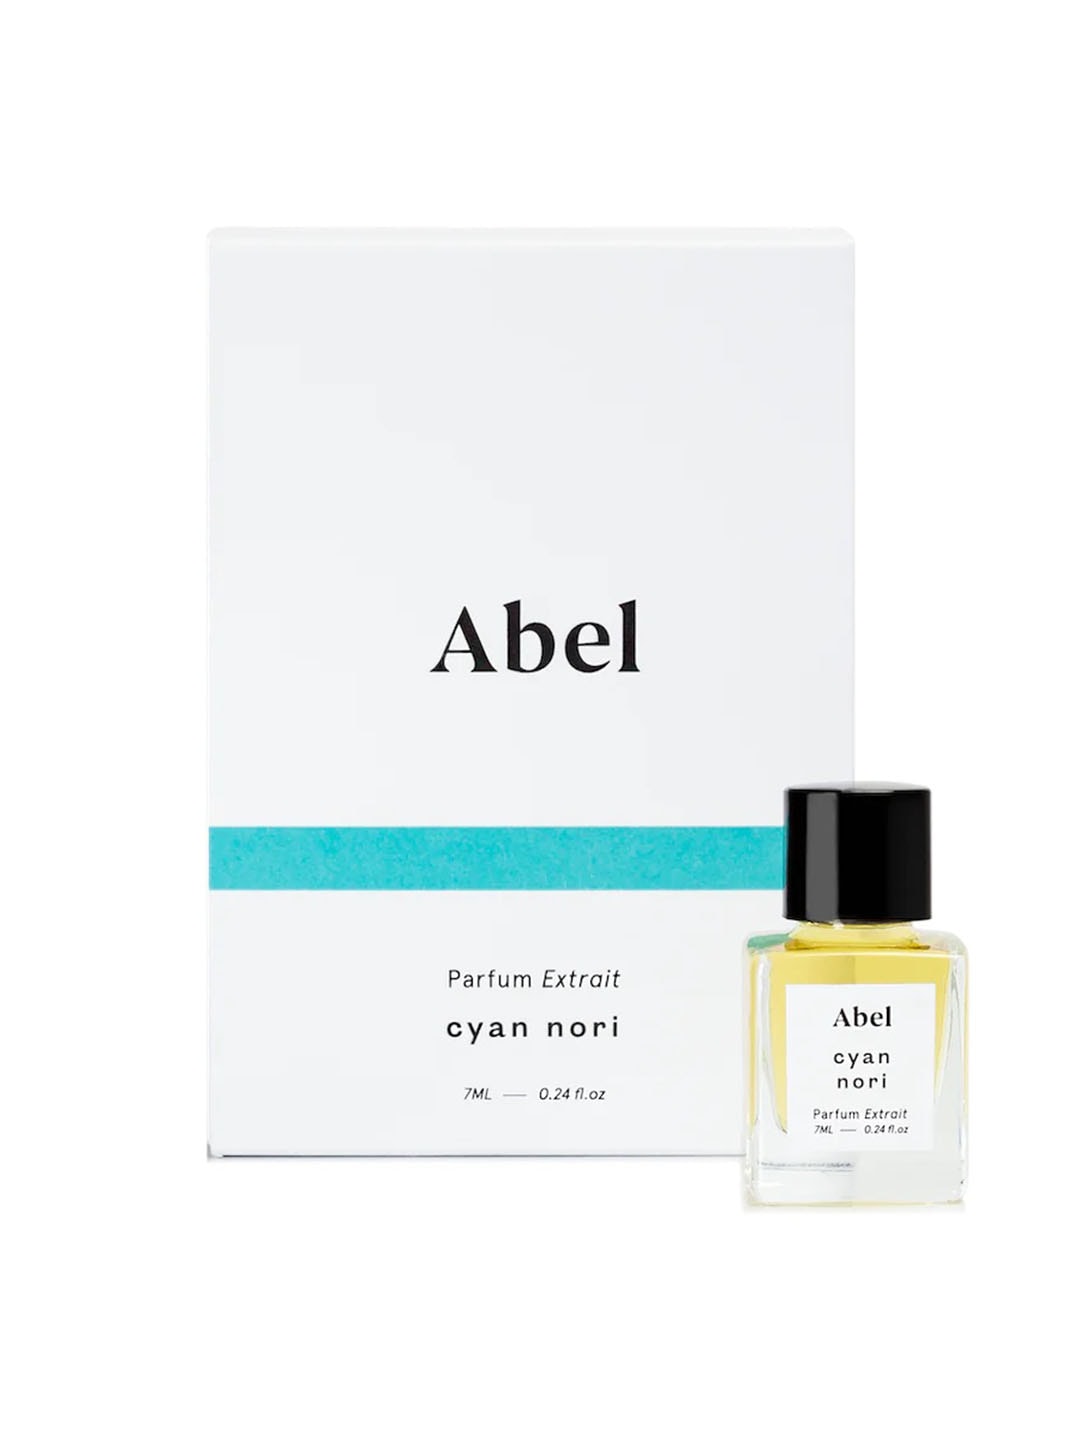 A bottle of Abel Cyan Nori Parfum Extrait – for joy in front of a box.